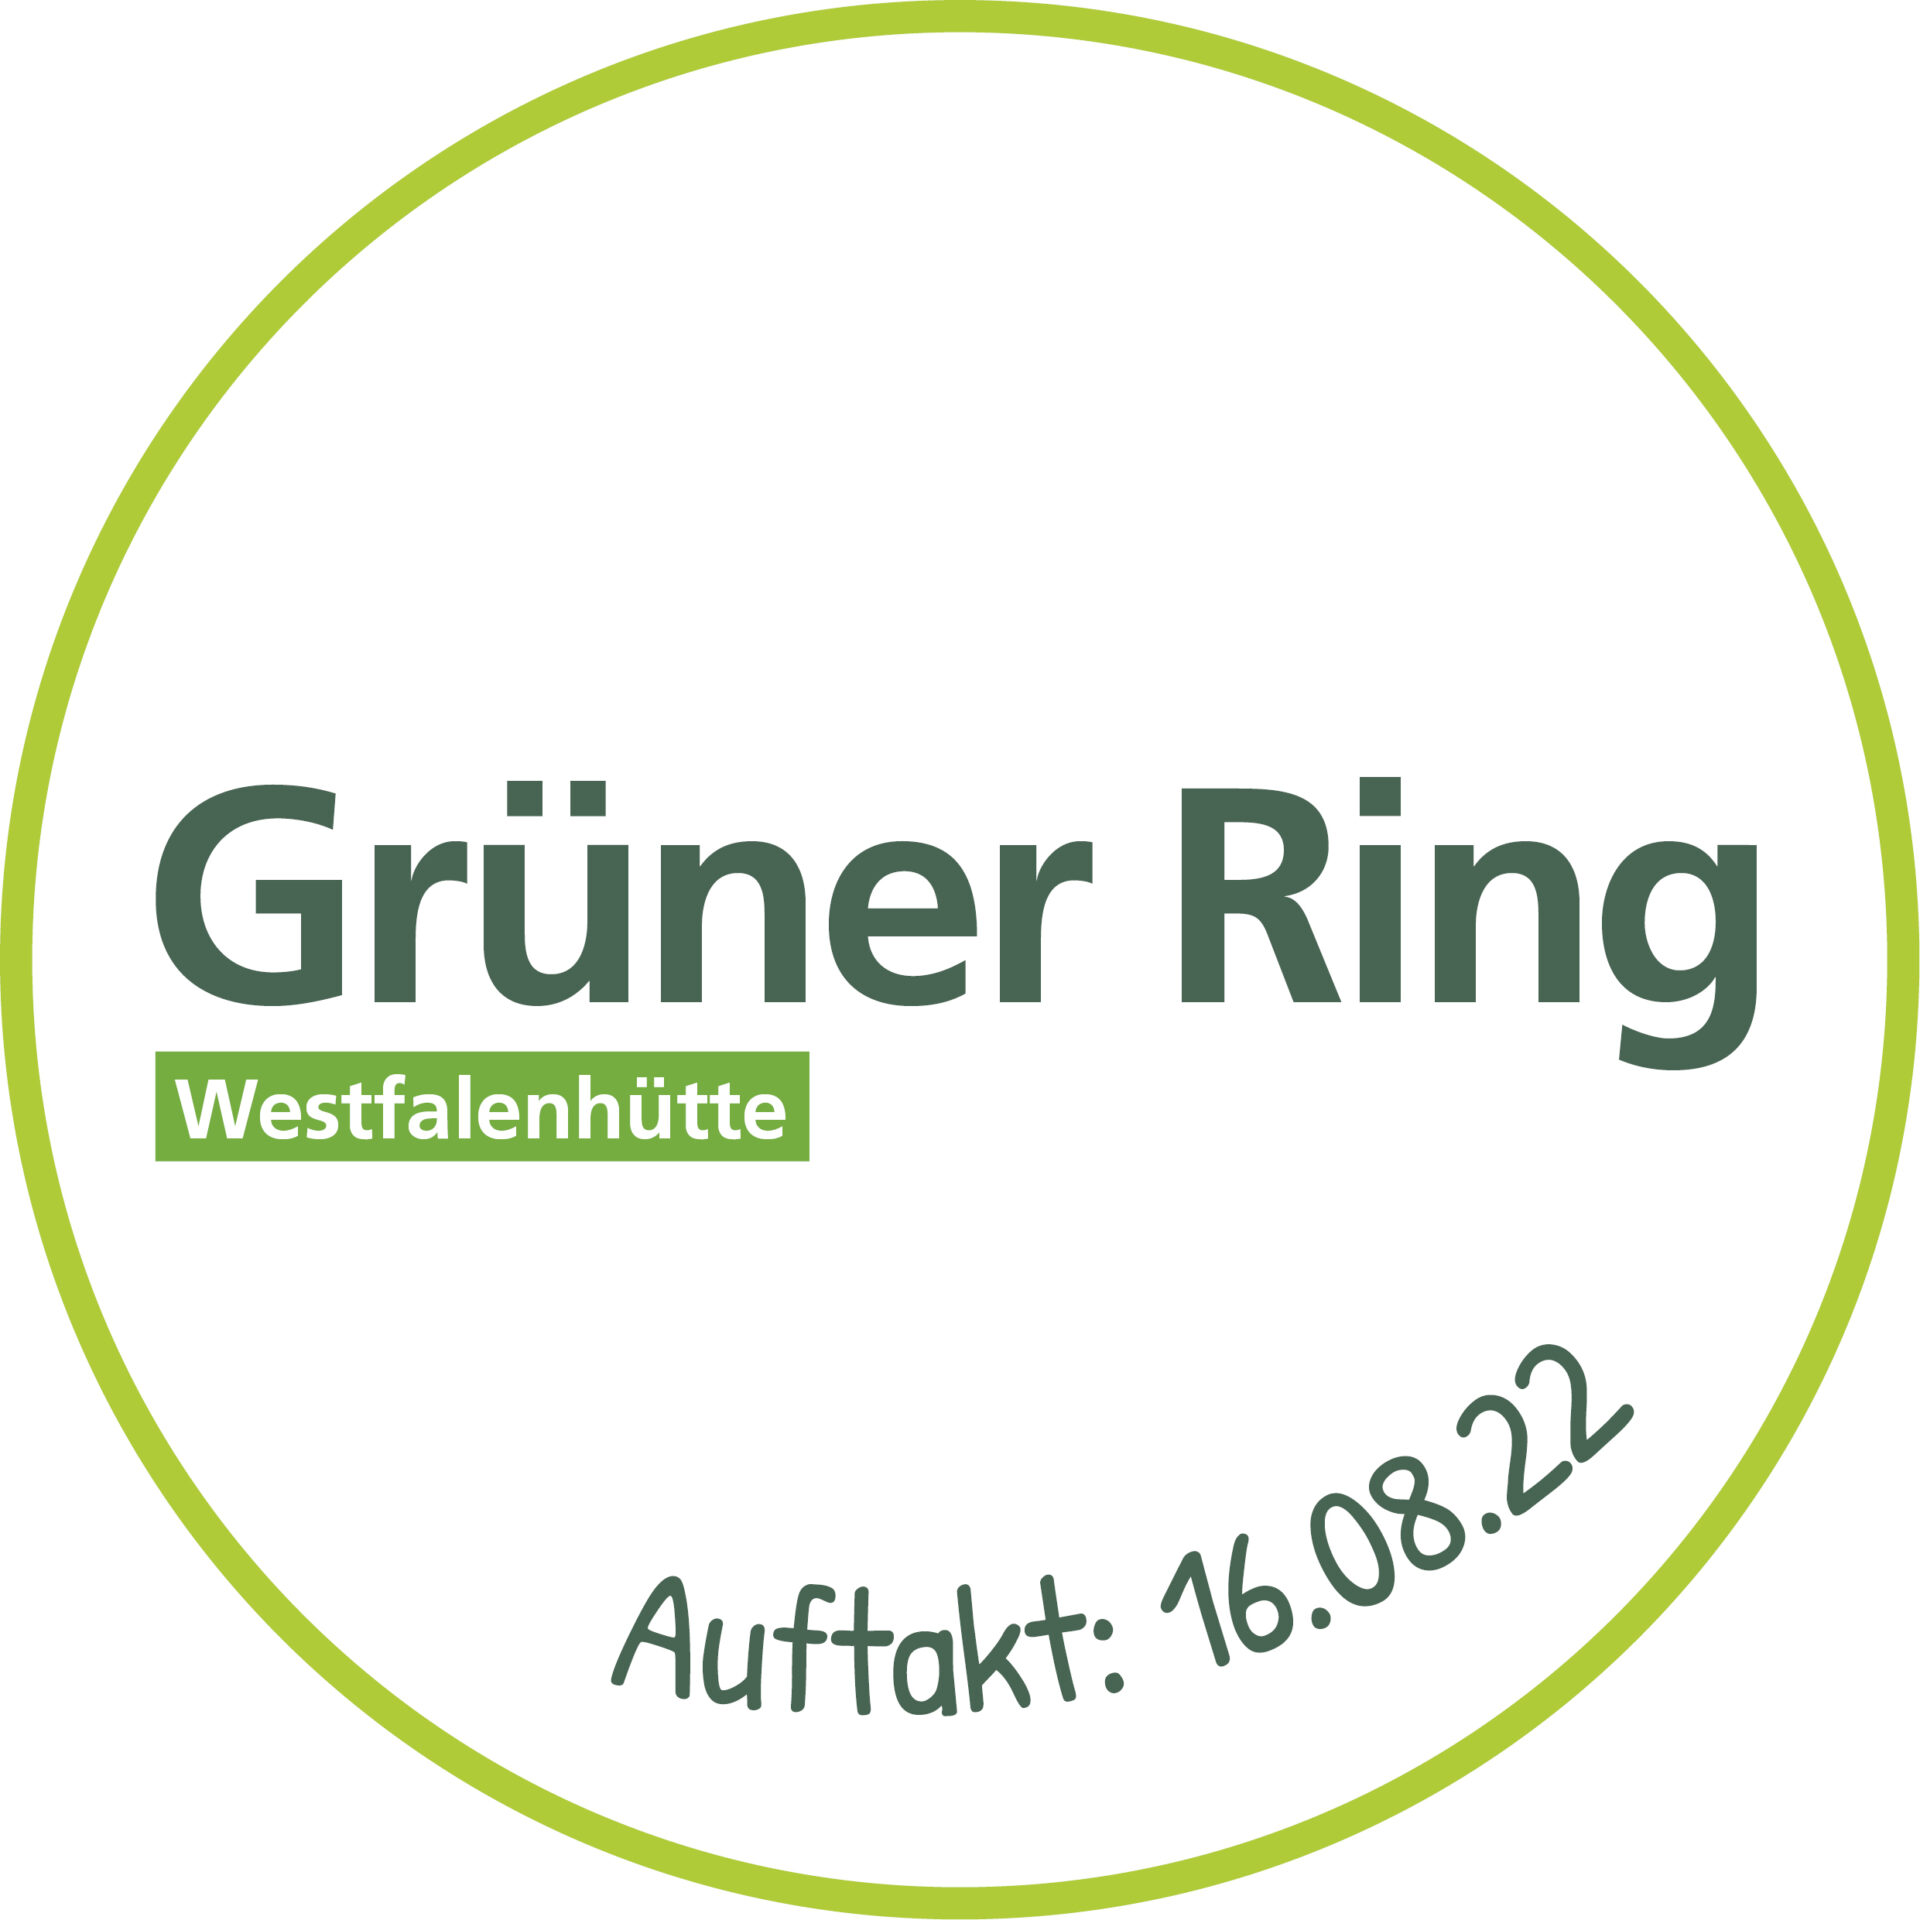 Grüner Ring Westfalenhütte Auftaktveranstaltung 16.08.2022